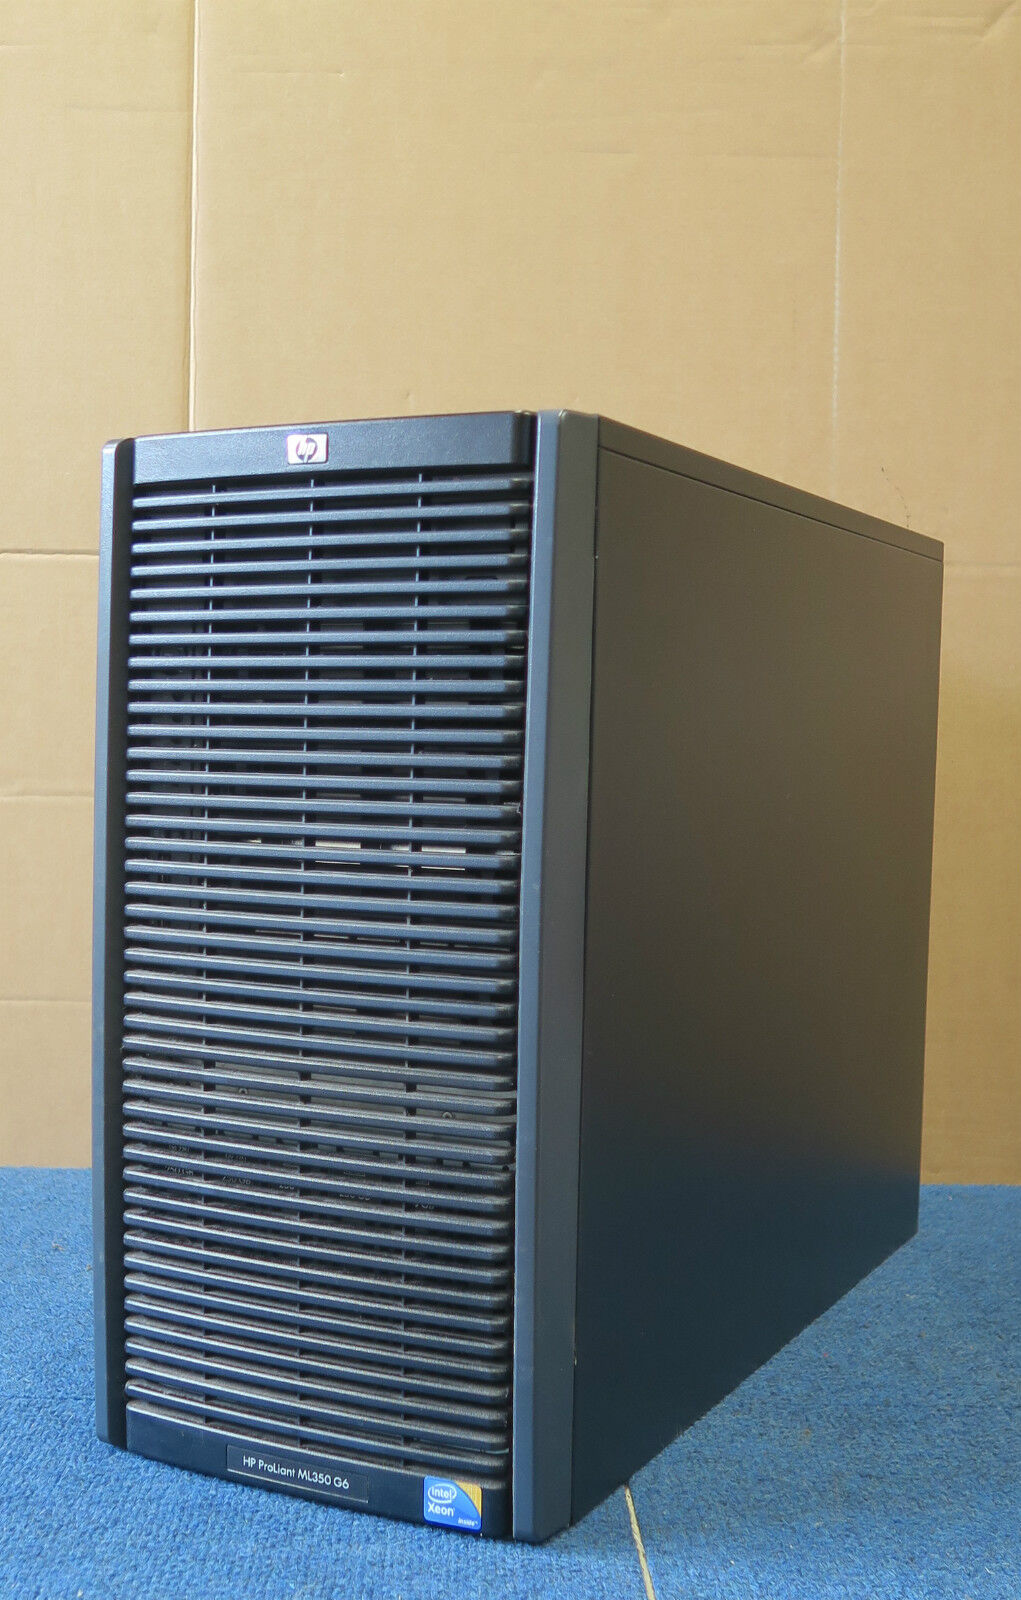 HP Proliant ML350 G6  Quad Core E5606 2.13GHz, 24G, 5 x 250GB Tower Server